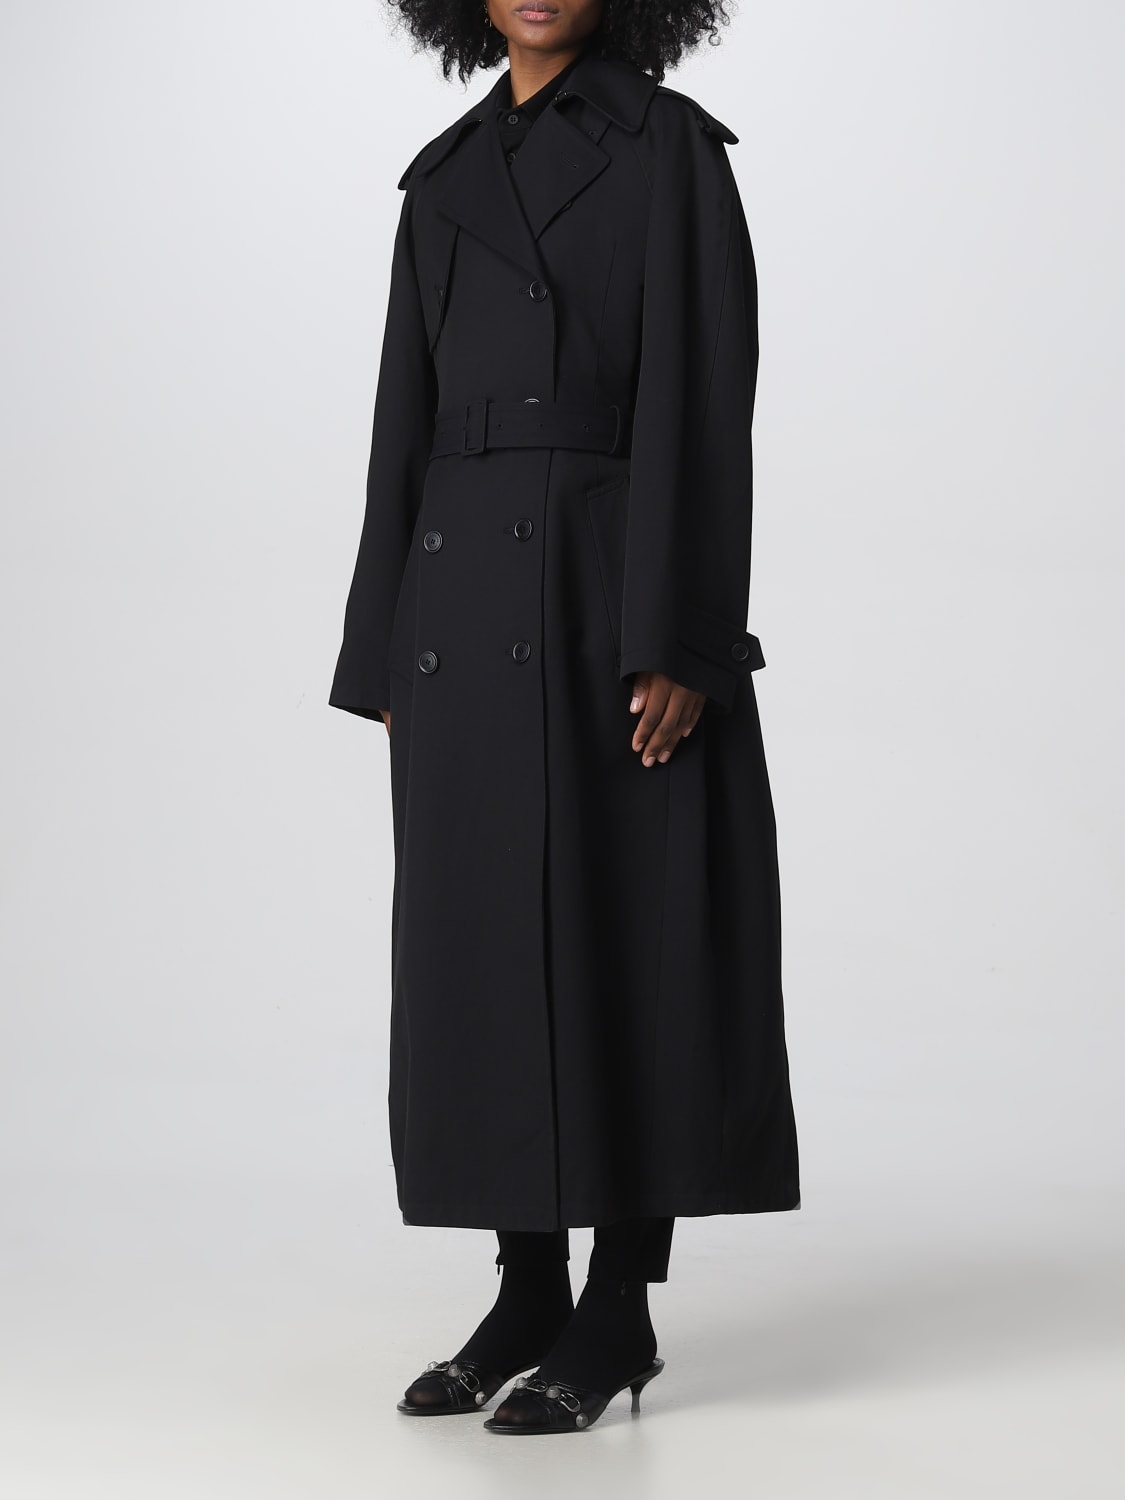 BALENCIAGA: trench coat in wool blend - Black | Balenciaga trench coat ...